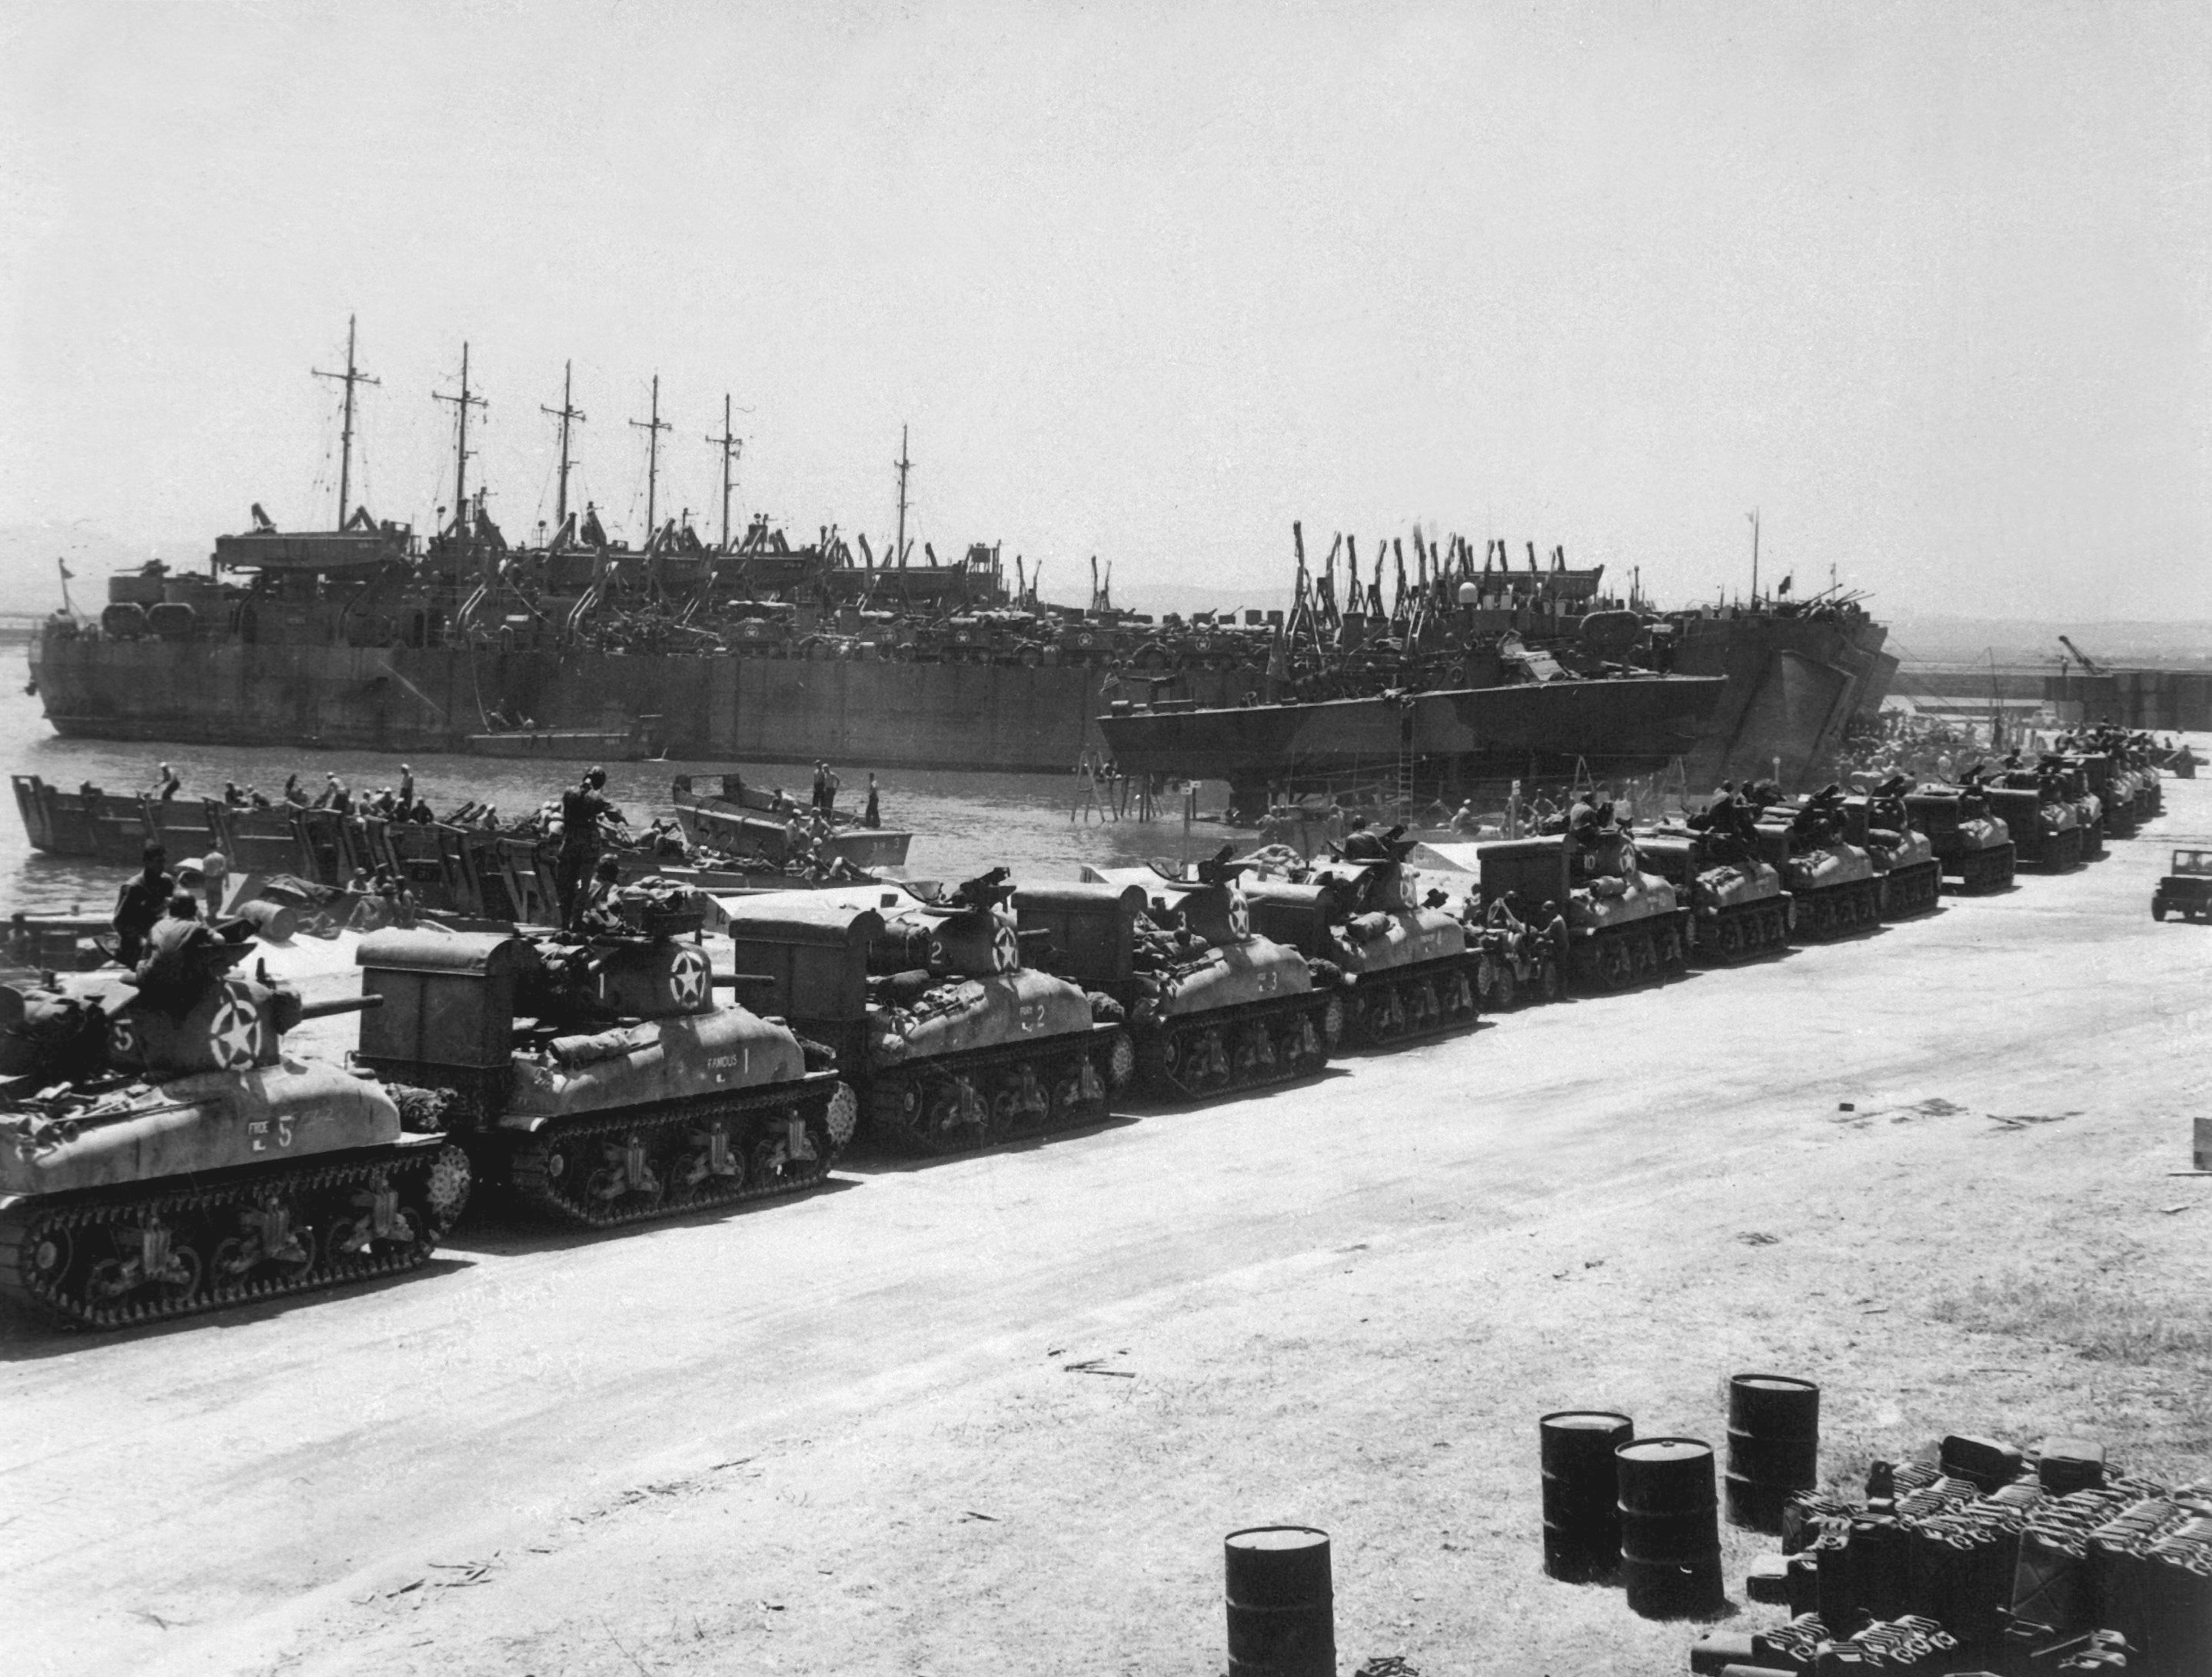 M4 Sherman tanks being loaded onto LSTs for Operation Husky, Pêcherie, Bizerte, Tunisia, 7 Jul 1943